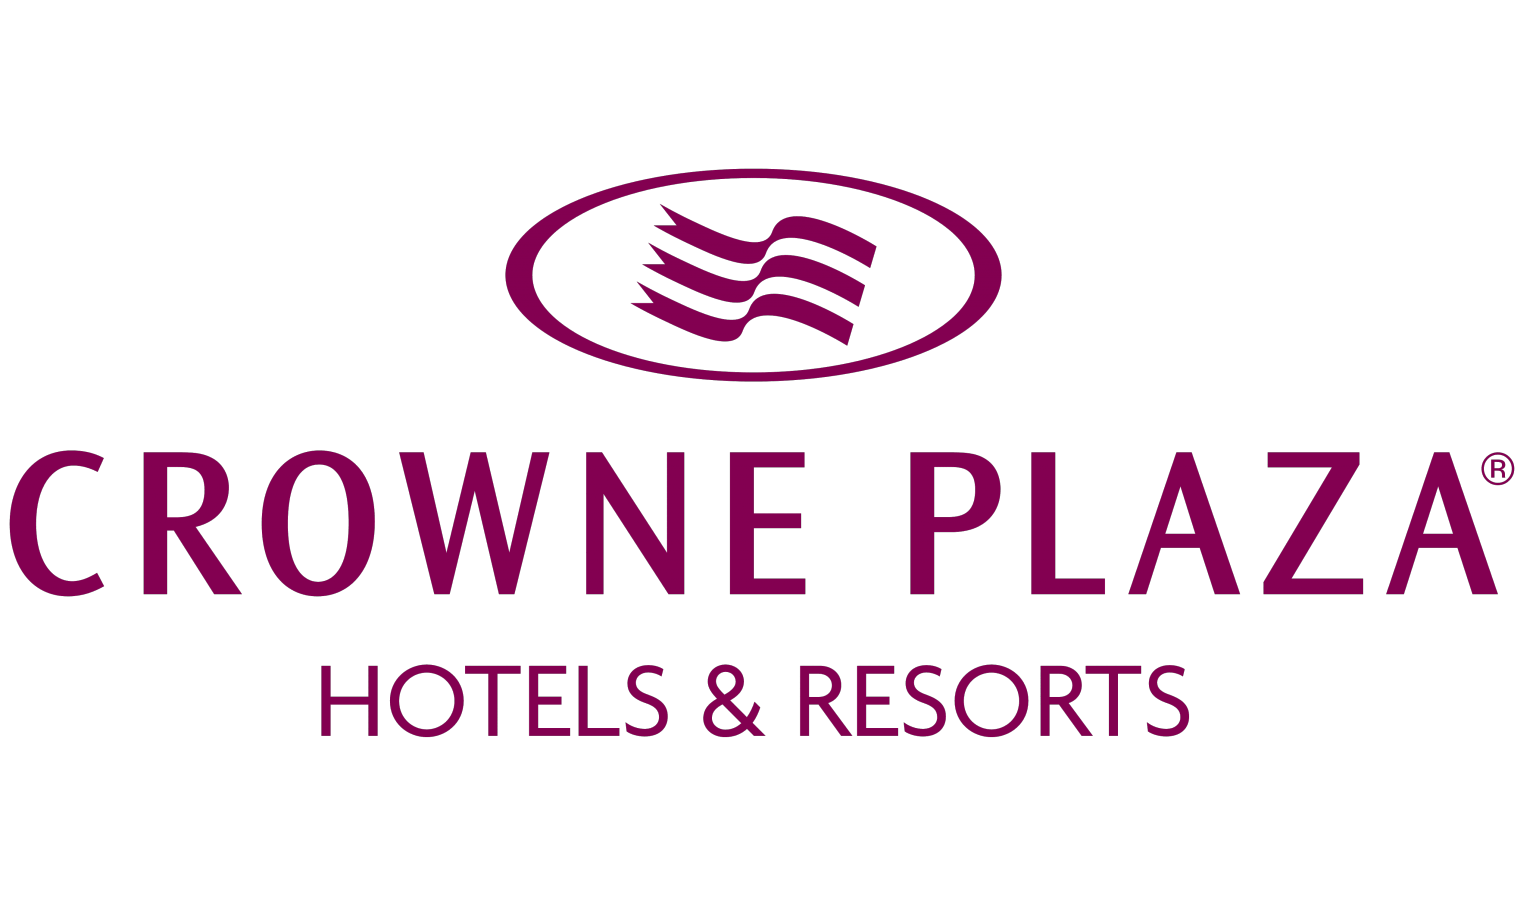 Crowne-Plaza-logo-1536x904